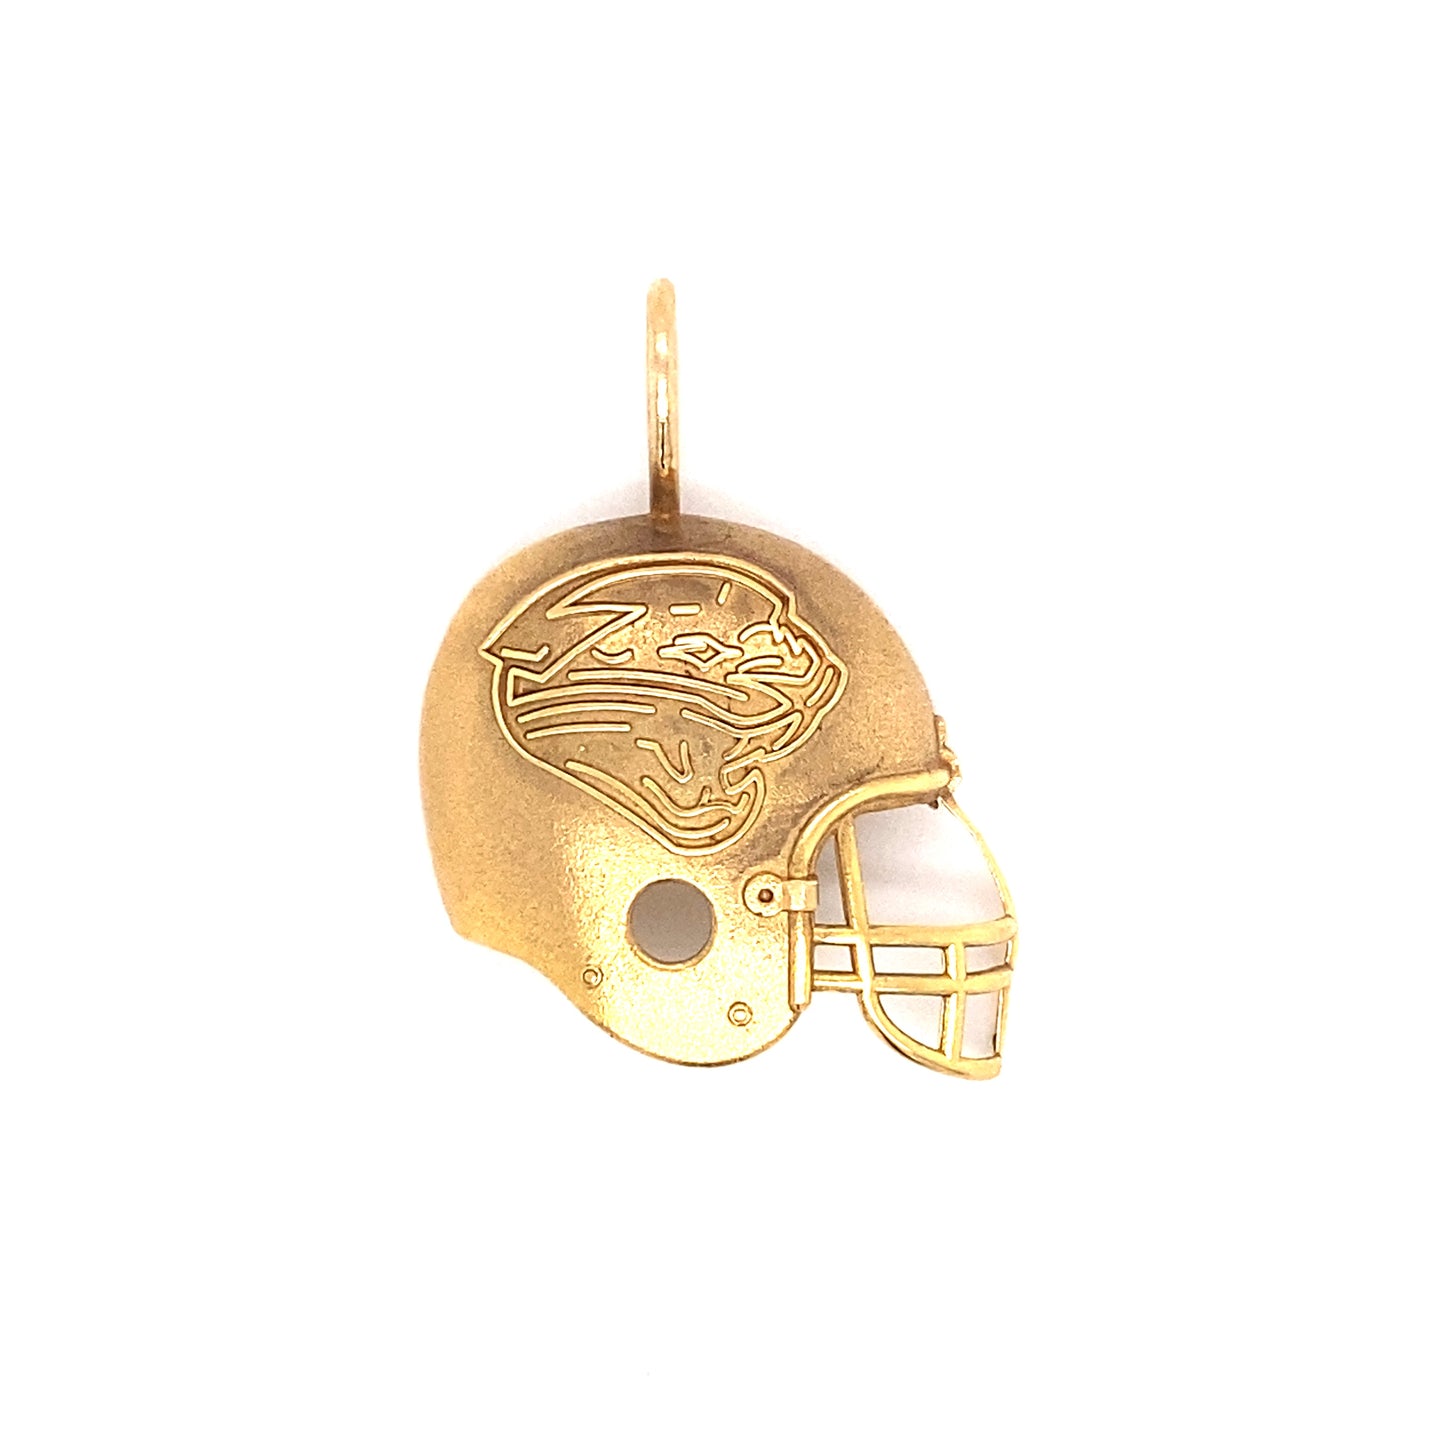 Circa 1990s Jacksonville Jaguars NFL Football Helmet Pendant in 14K Gold